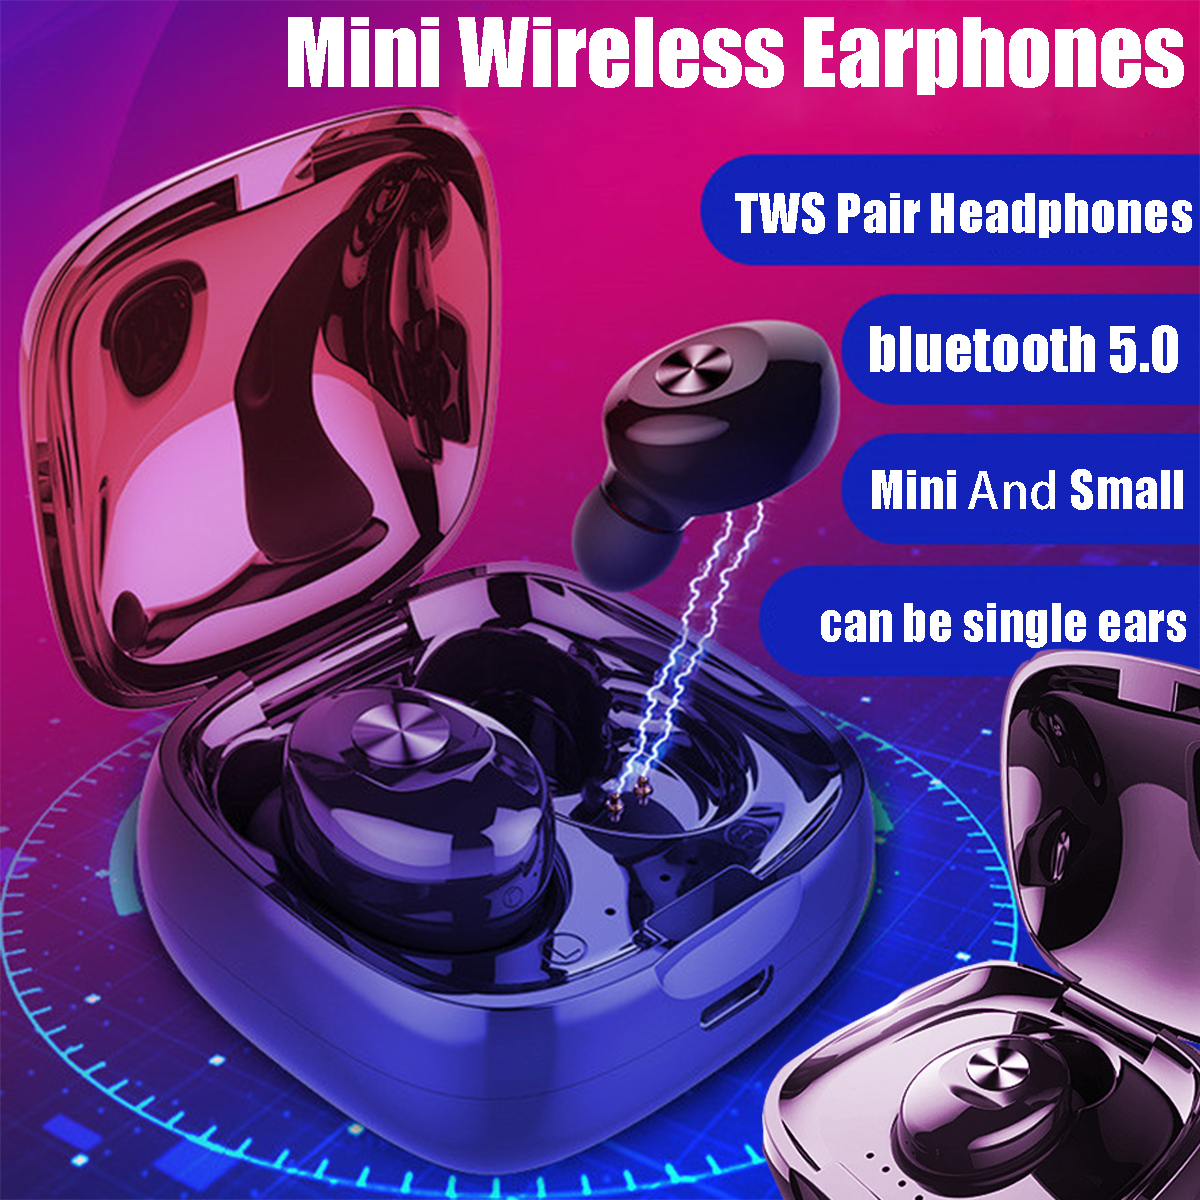 XG12-TWS-Wireless-bluetooth-50-Earphone-HiFi-Stereo-Auto-Pairing-Bilateral-Call-Headphone-1476662-1